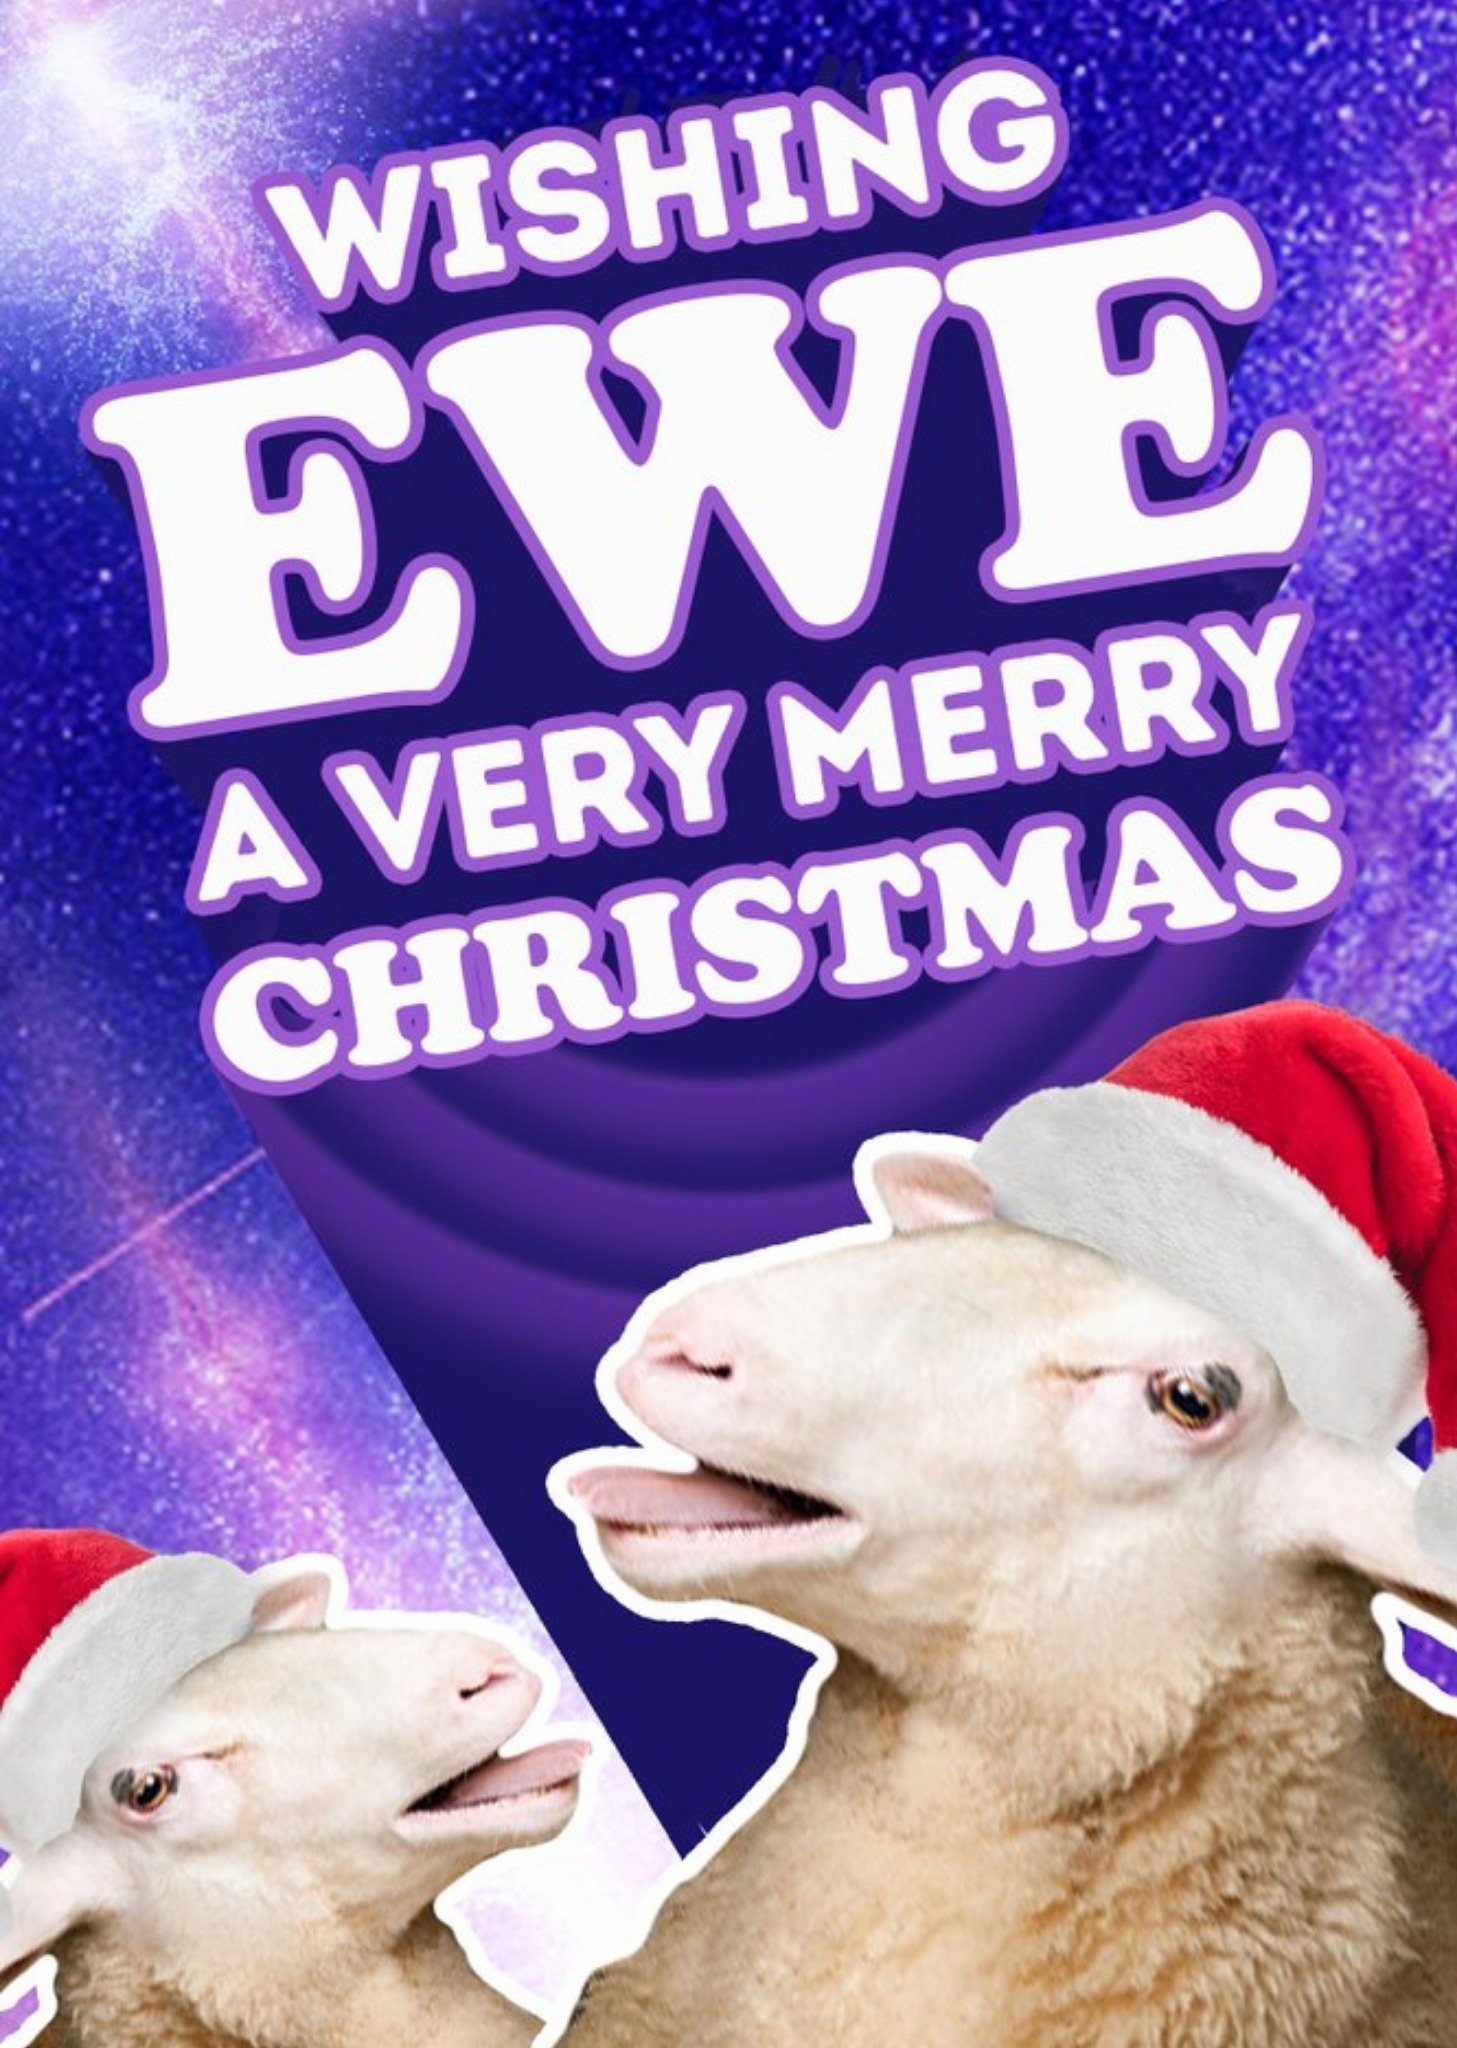 Moonpig Wishing Ewe A Very Merry Christmas Funny Card, Large